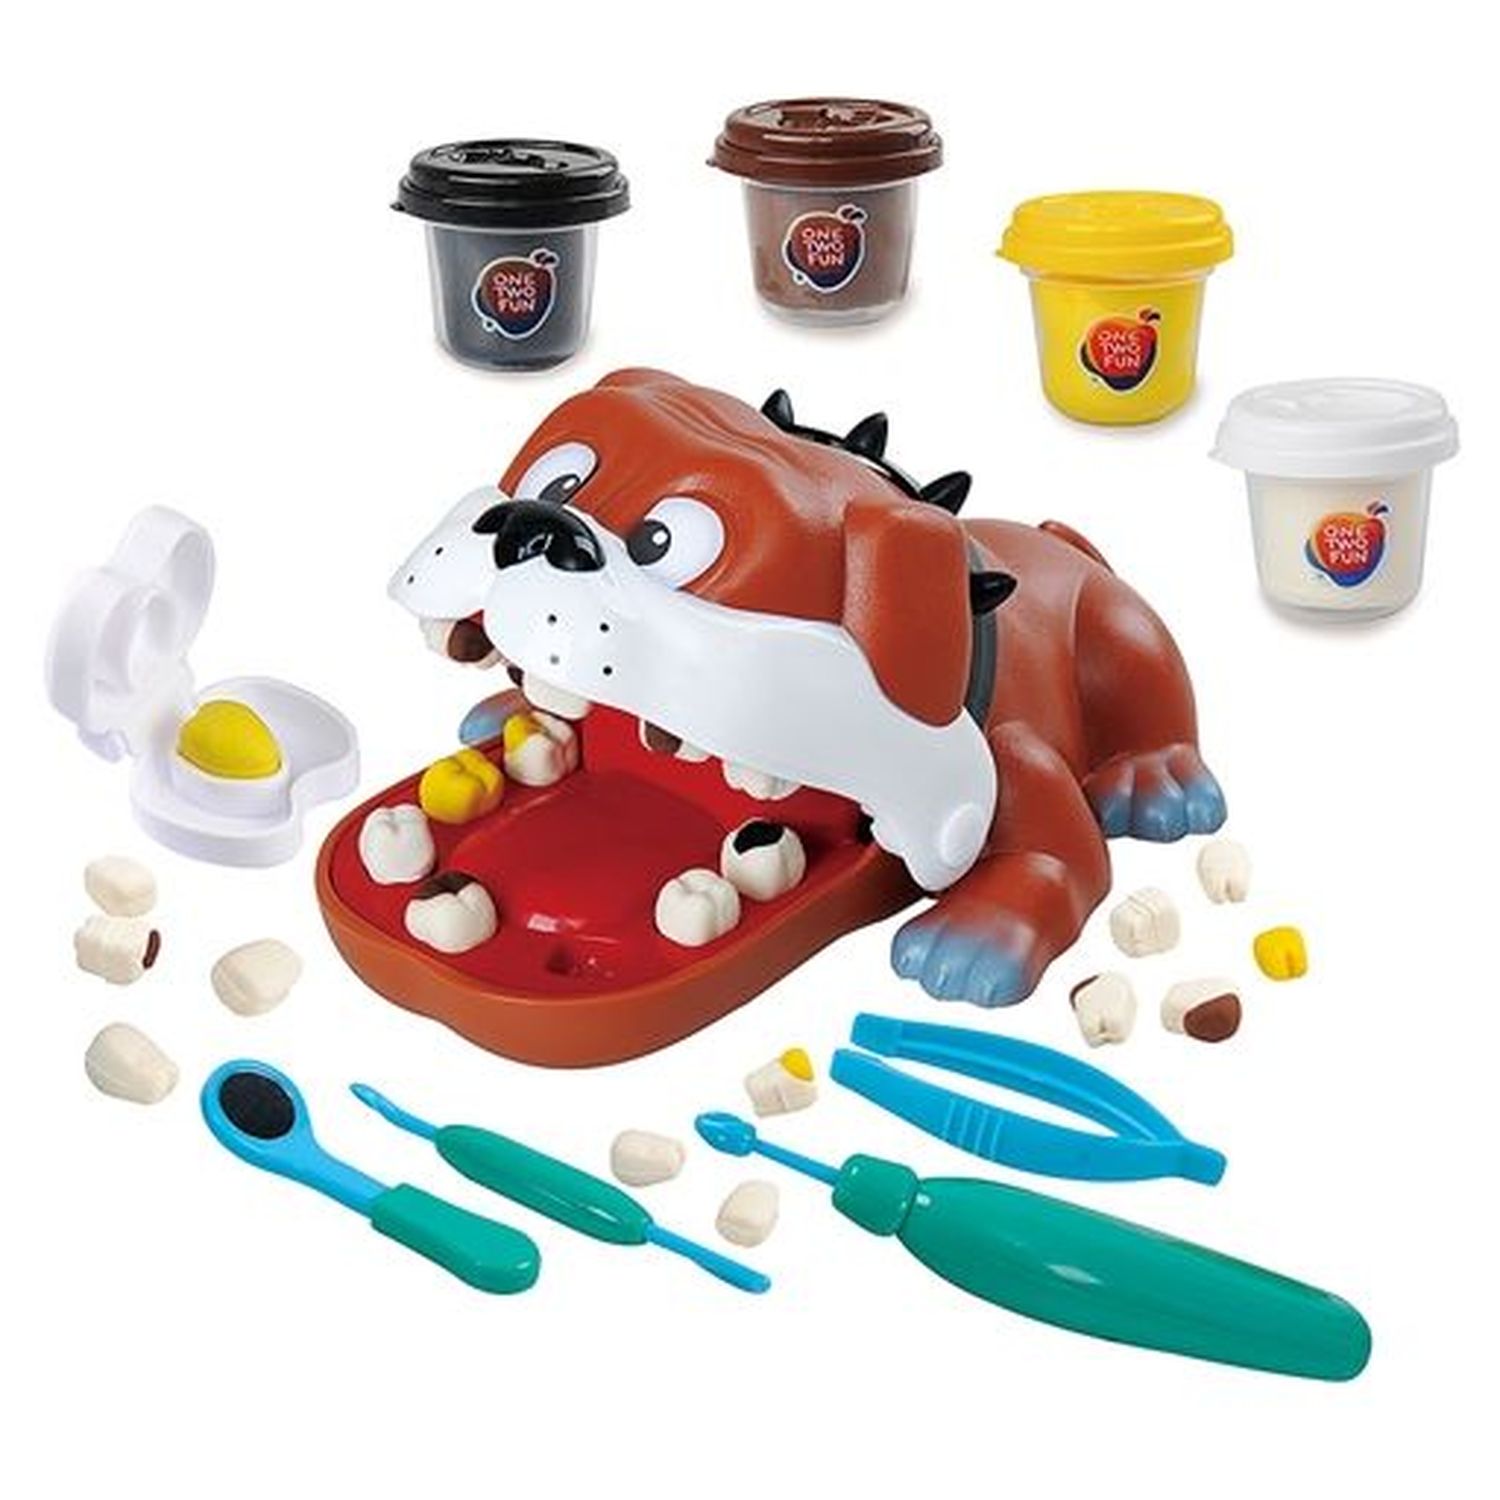 Pâte à modeler Le dentiste Play-Doh - Pâte à modeler